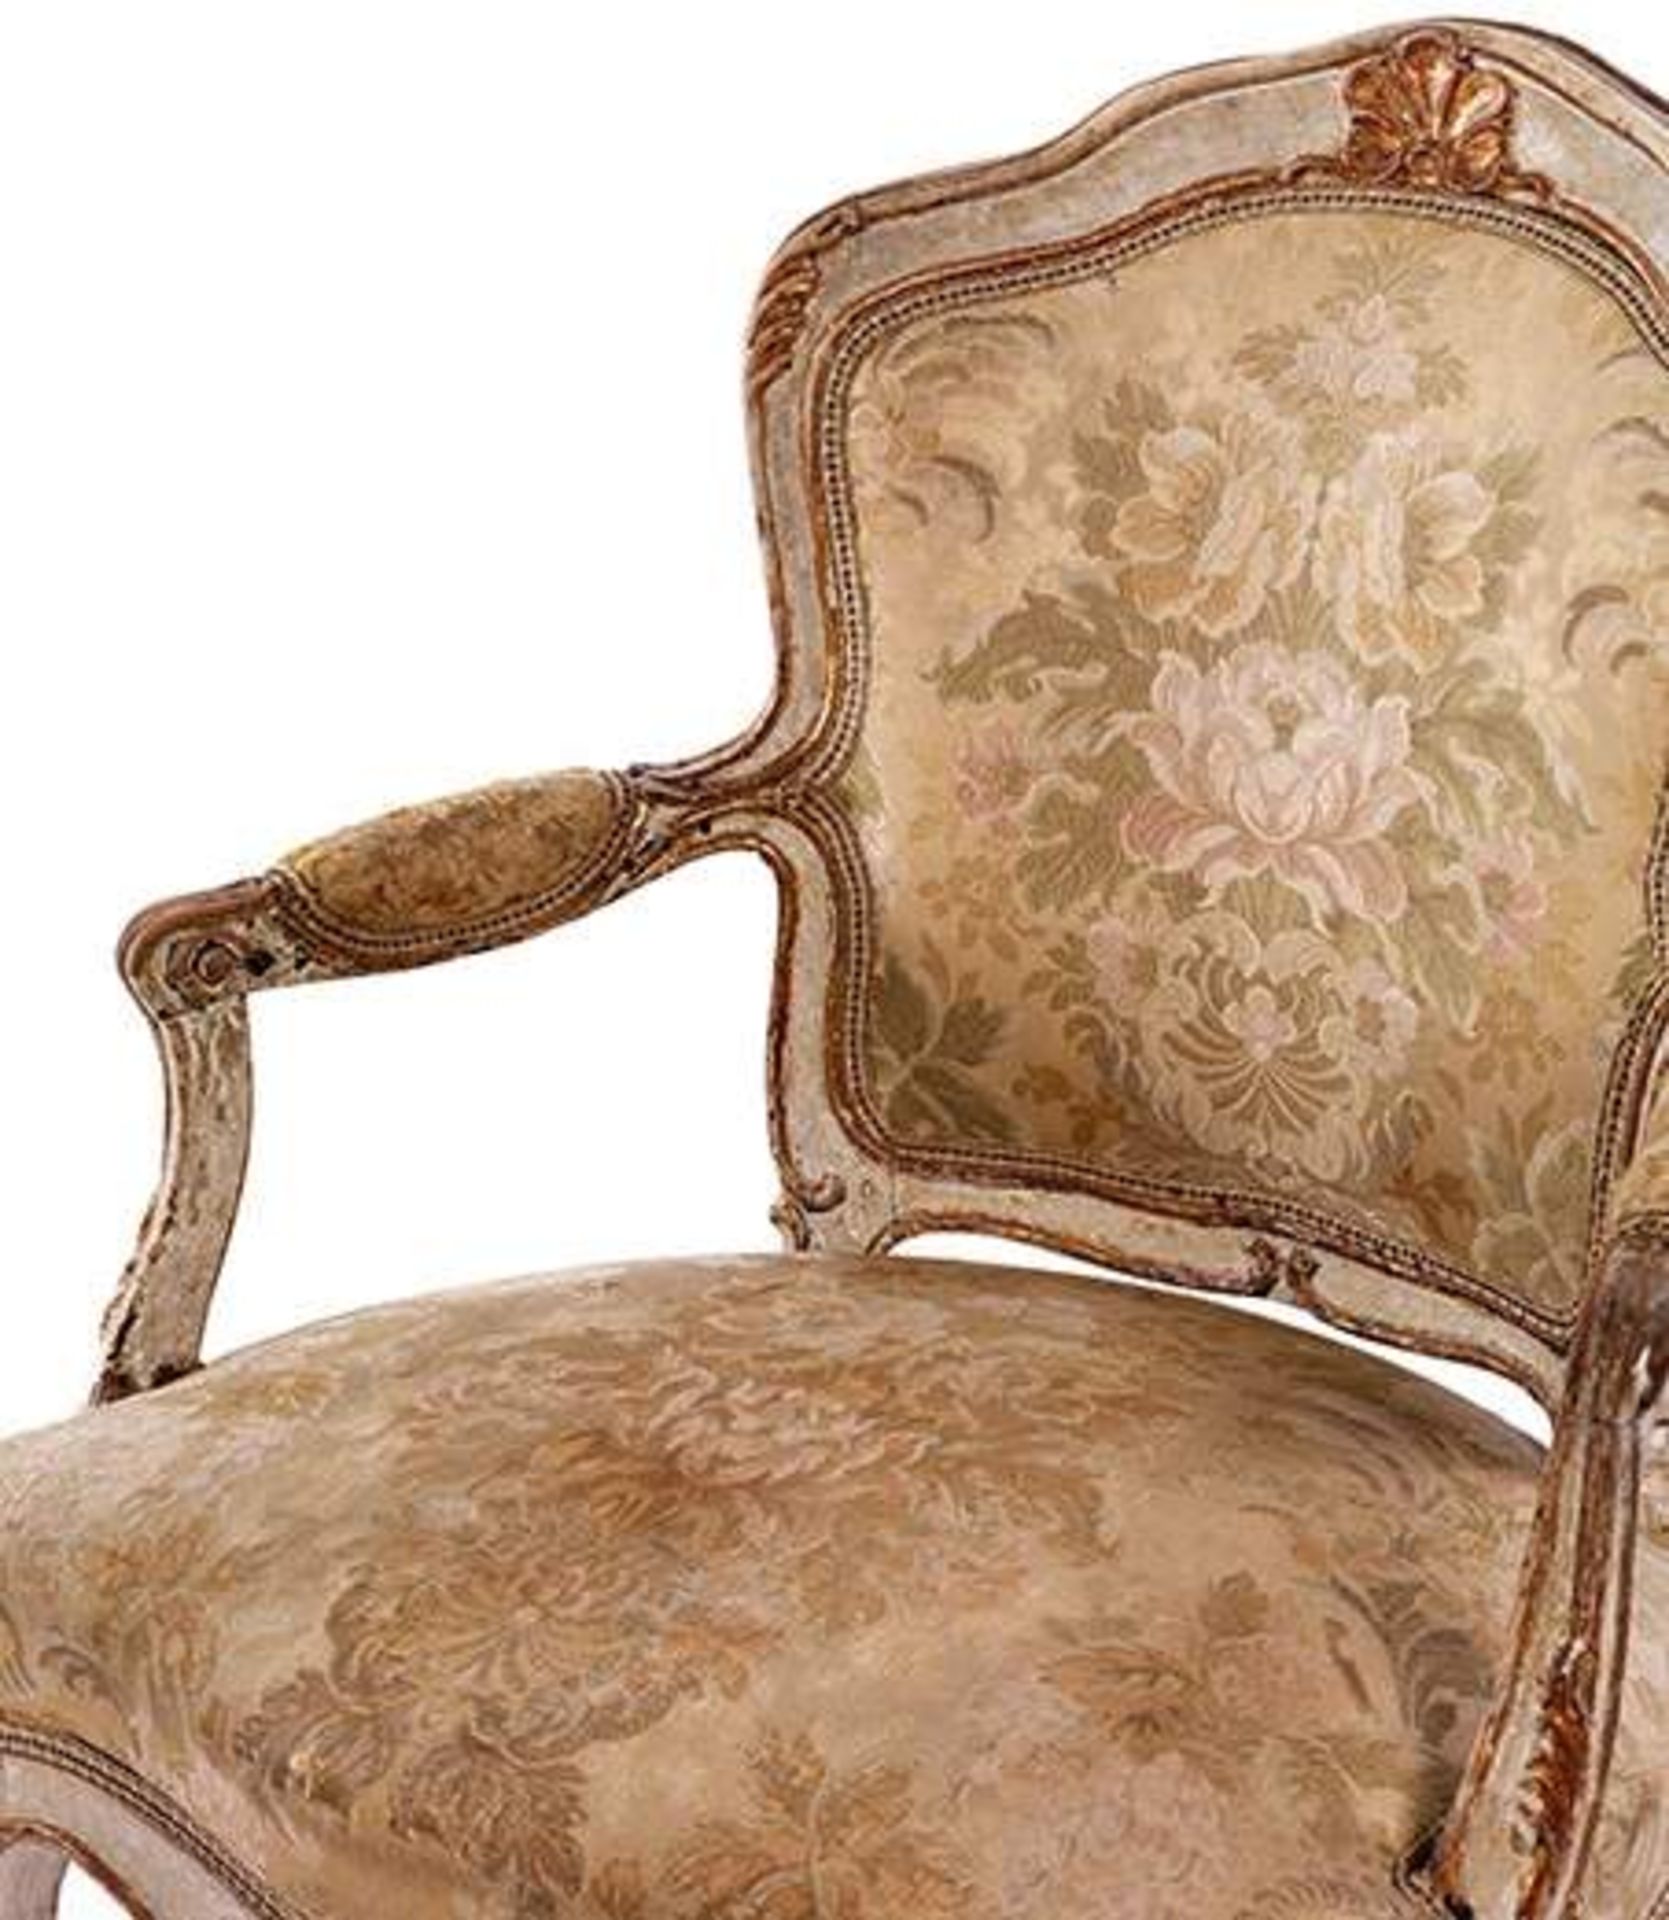 Pair of small armchairsHeight: 87 cm. Width: ca. 67 cm. Depth: ca. 50 cm. France, 18th century. - Bild 2 aus 5